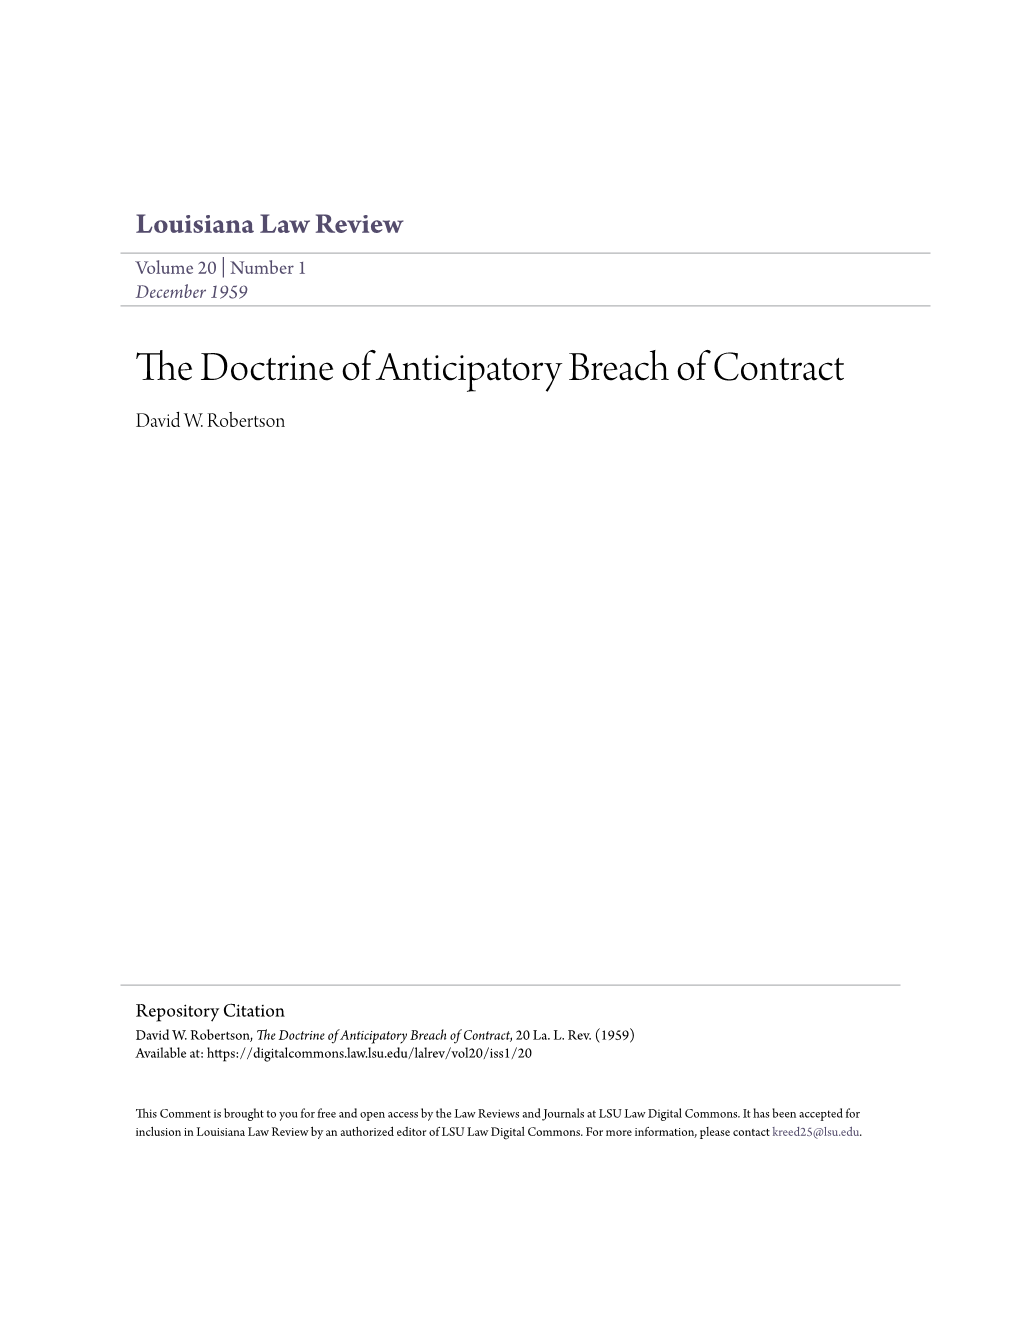 The Doctrine of Anticipatory Breach of Contract, 20 La